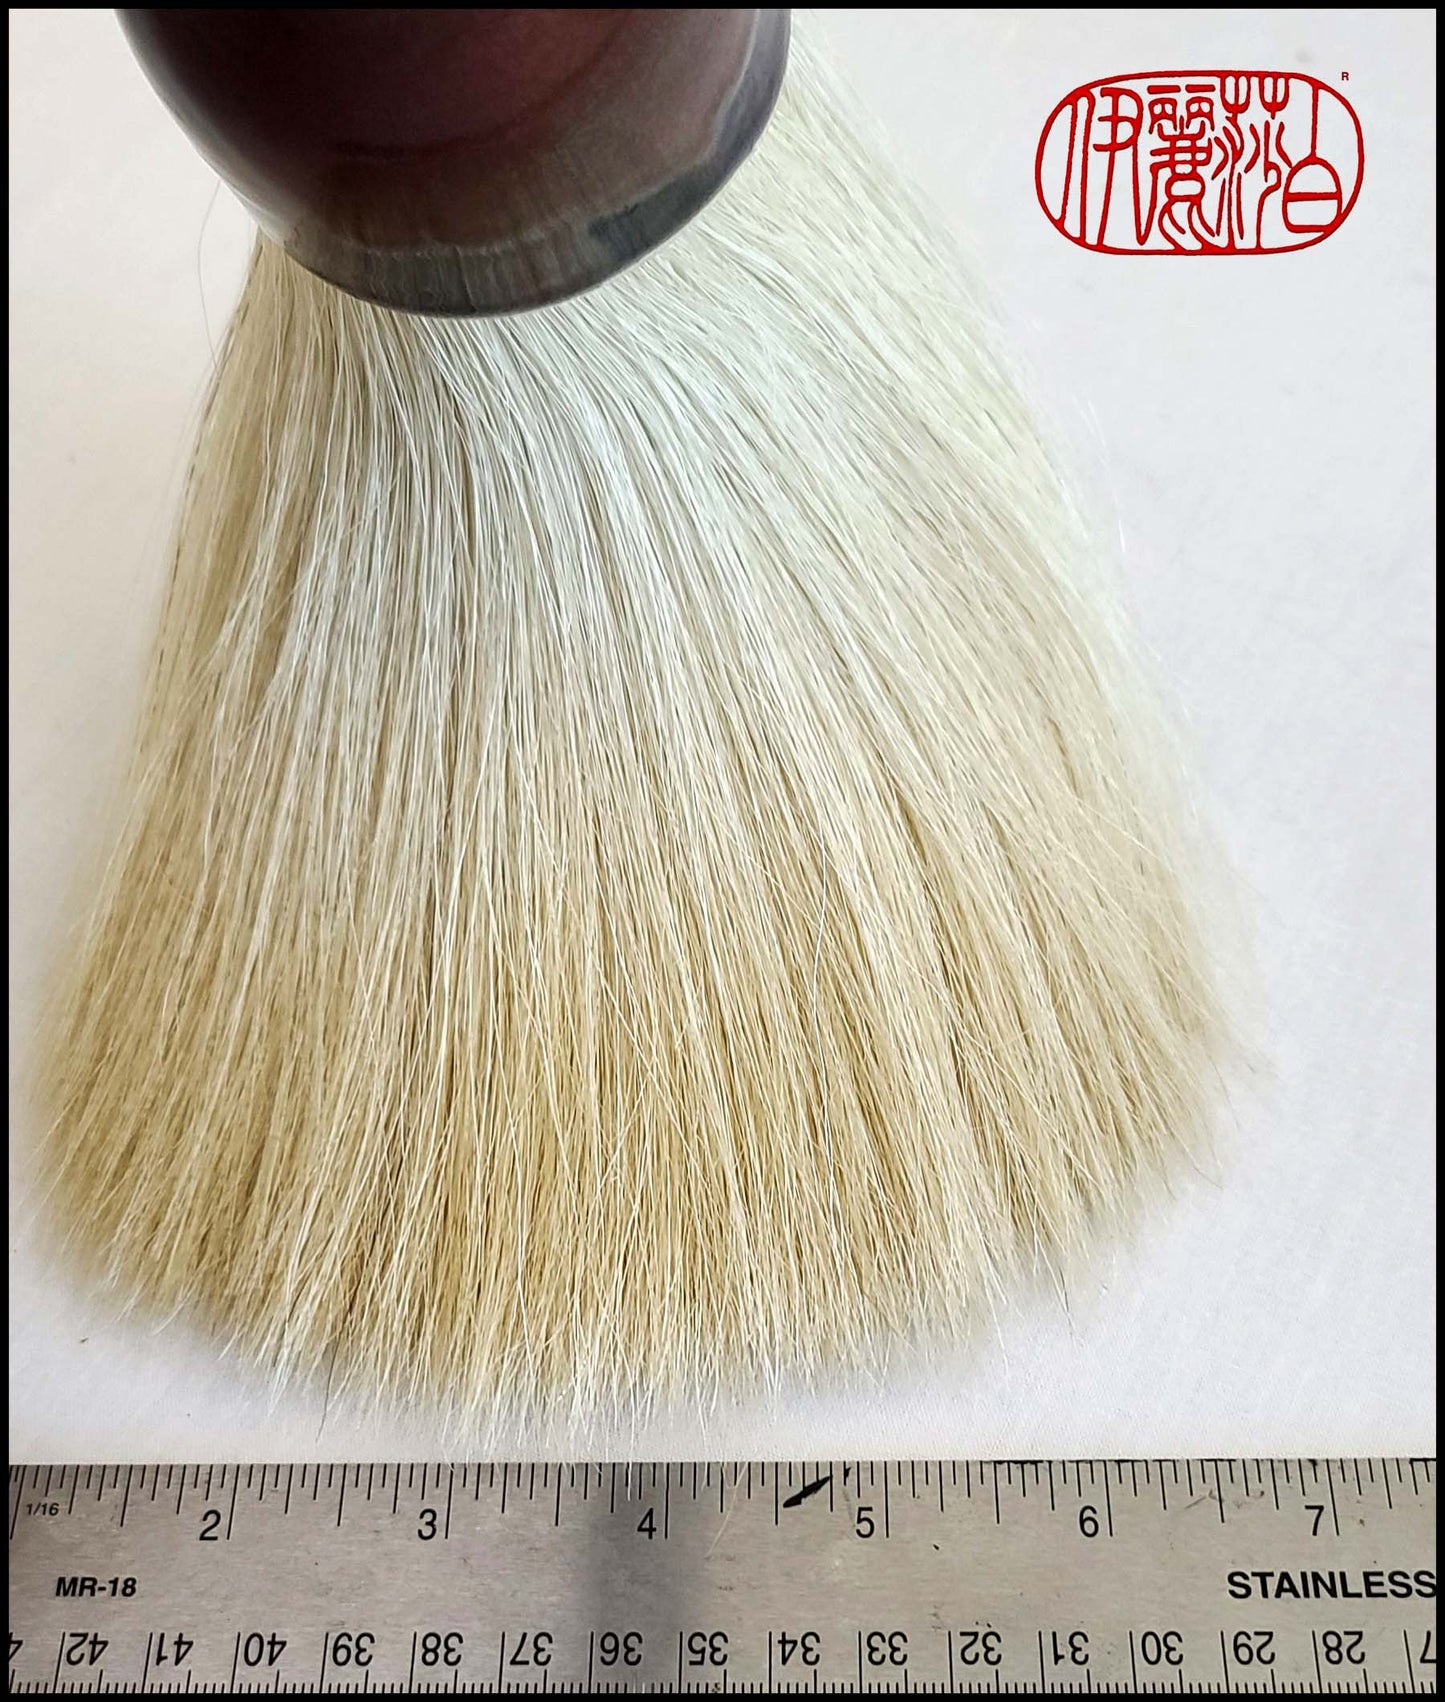 White Horsehair Sumi-e Paint Brush with Ceramic Ferrule #119 Art Supplies Elizabeth Schowachert Art